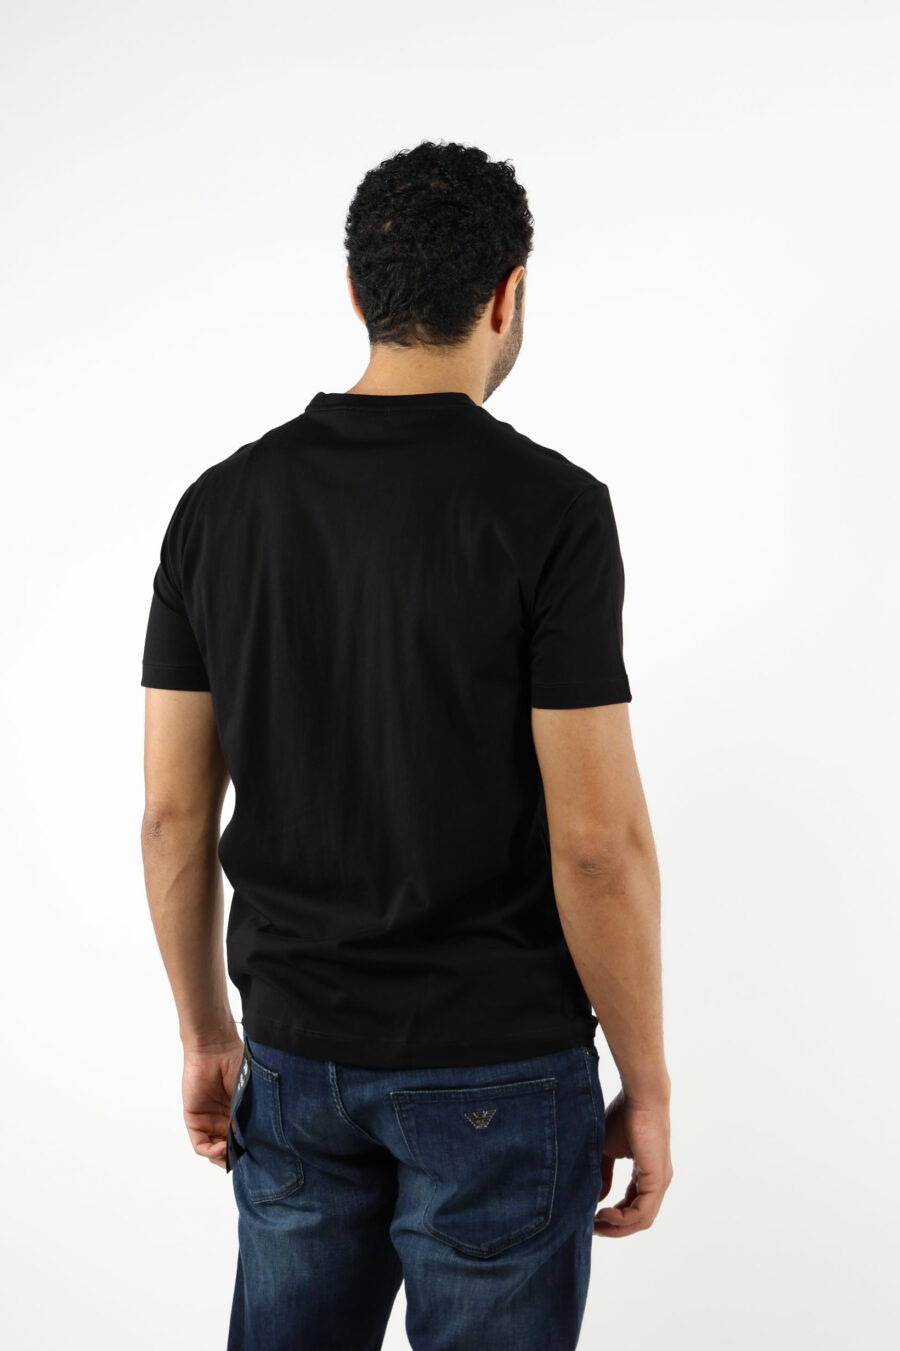 Camiseta negra con minilogo "lux identity" negro en placa dorada - 110815